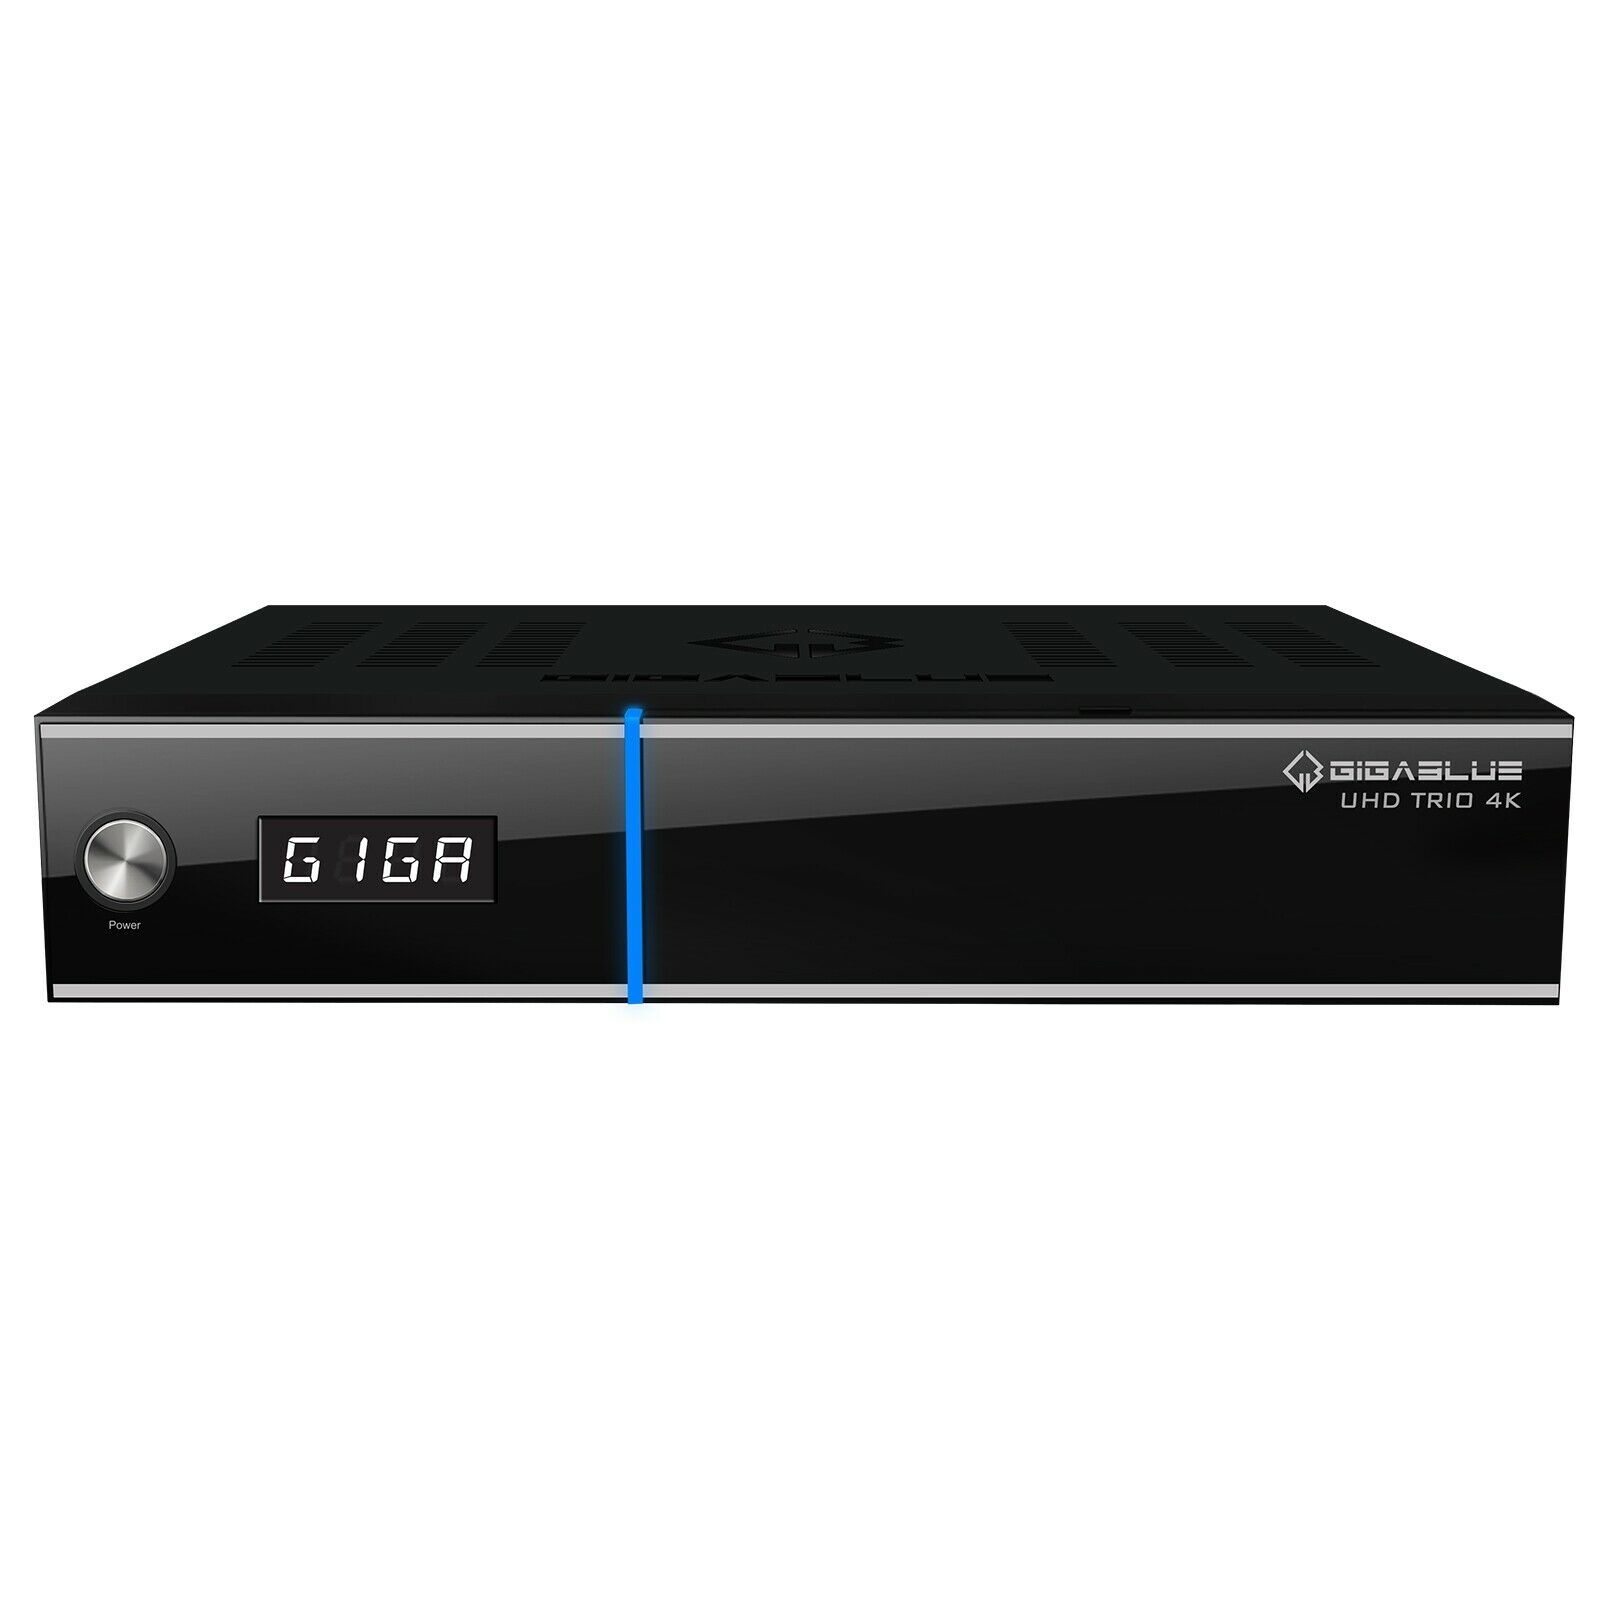 Gigablue UHD TRIO 4K 2160p 1xDVB-S2X 1xDVB-C/T2 Tuner Multistream Linux Receiver